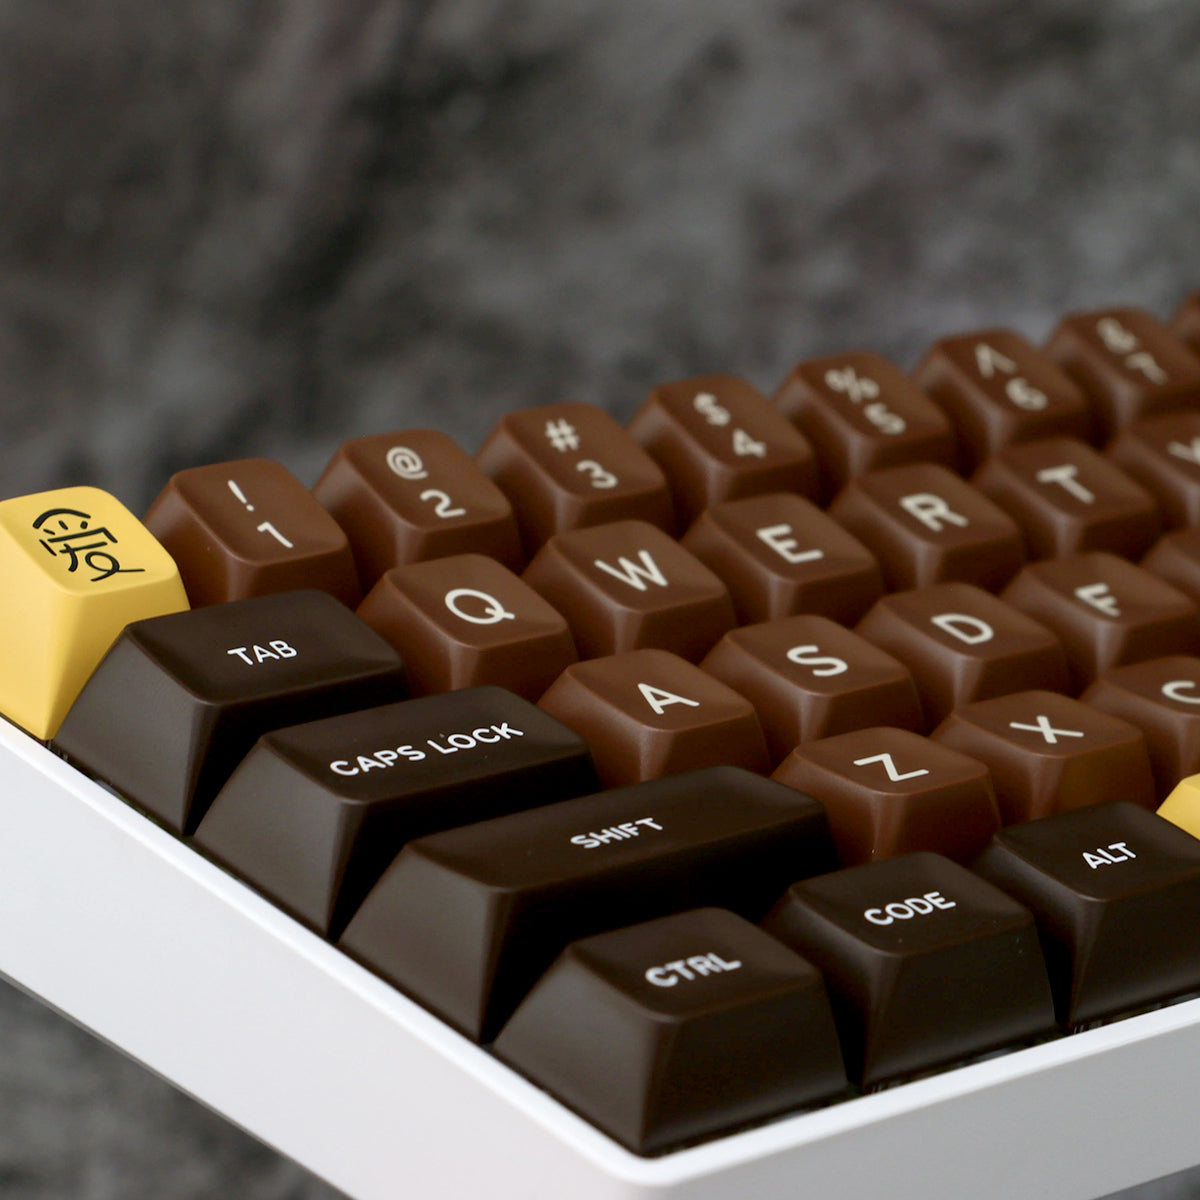 SA Double-Shot ABS Keycap Set - Chocolate - KeyCapUS